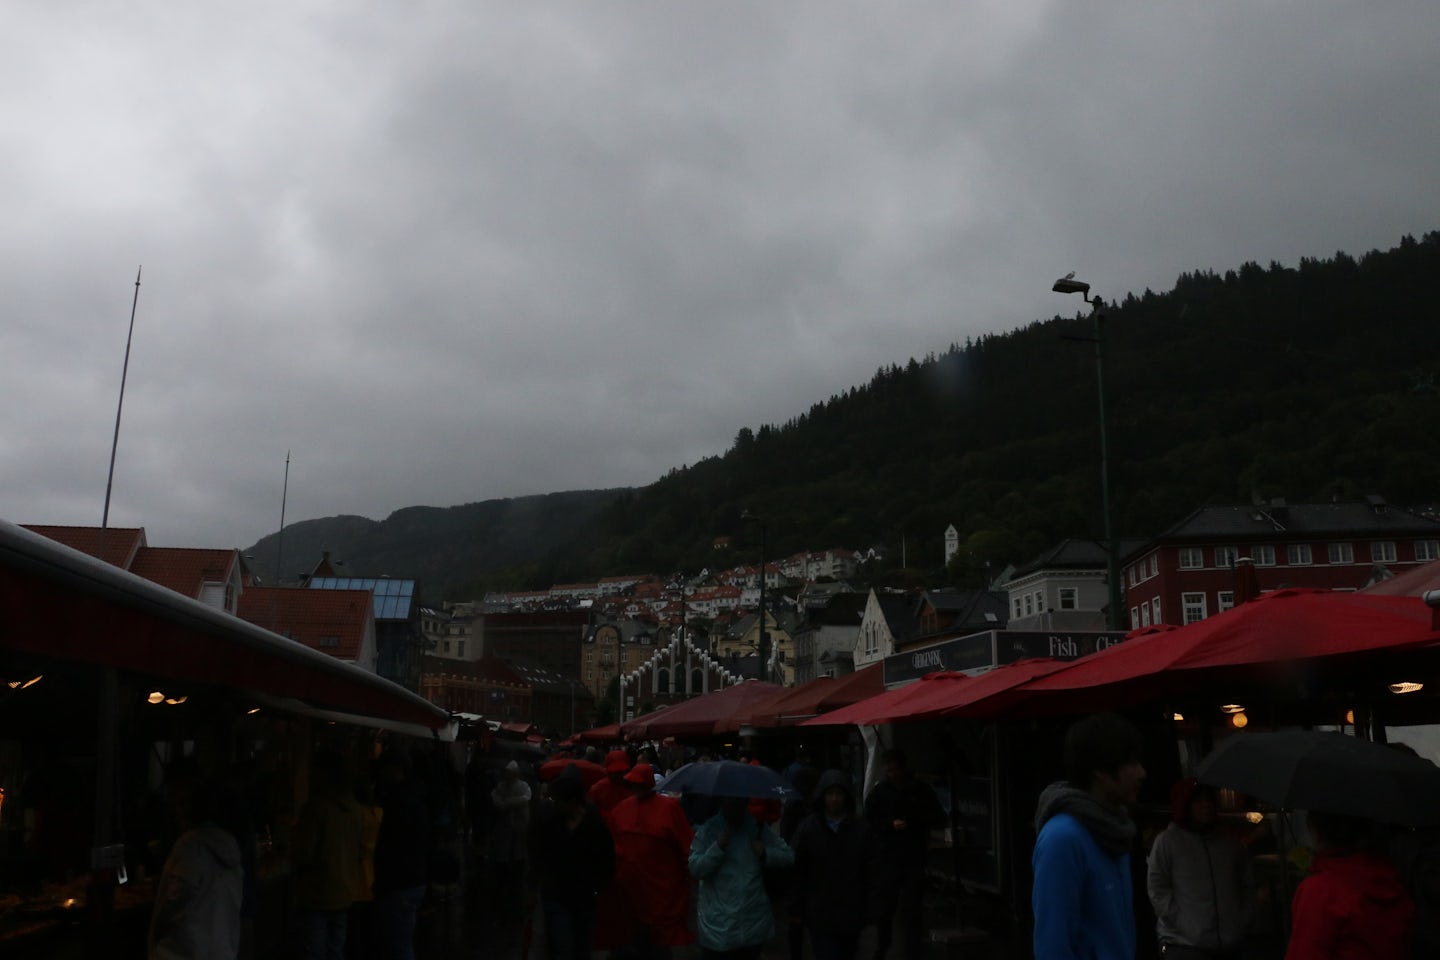 Fish Market Bergen in the rain